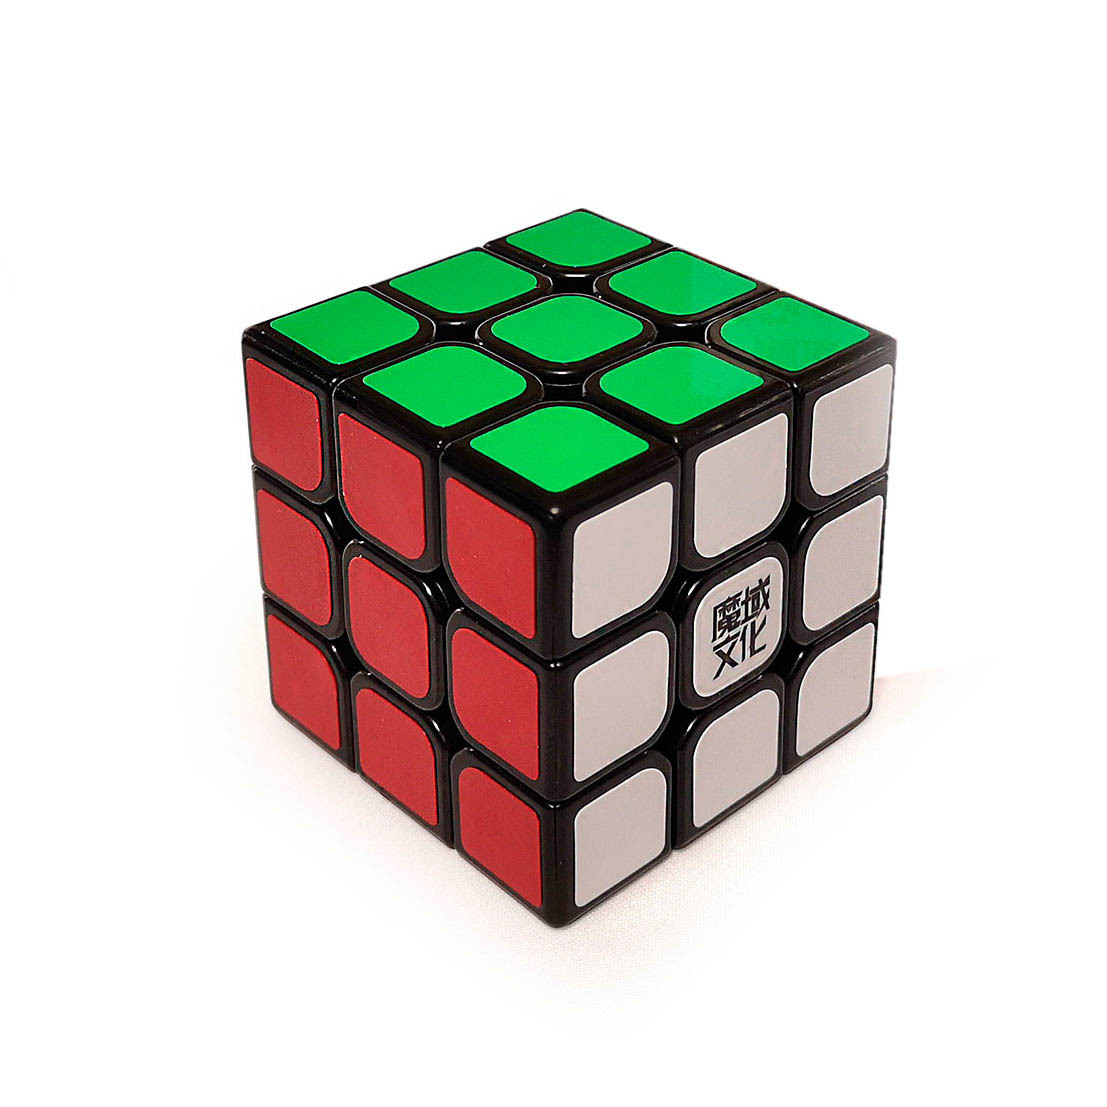 Cube go. Кубик Рубика MOYU Aolong v 1. Мини кубик Рубика 3х3. Гоу куб 2х2. Волшебный куб Дели 74504.